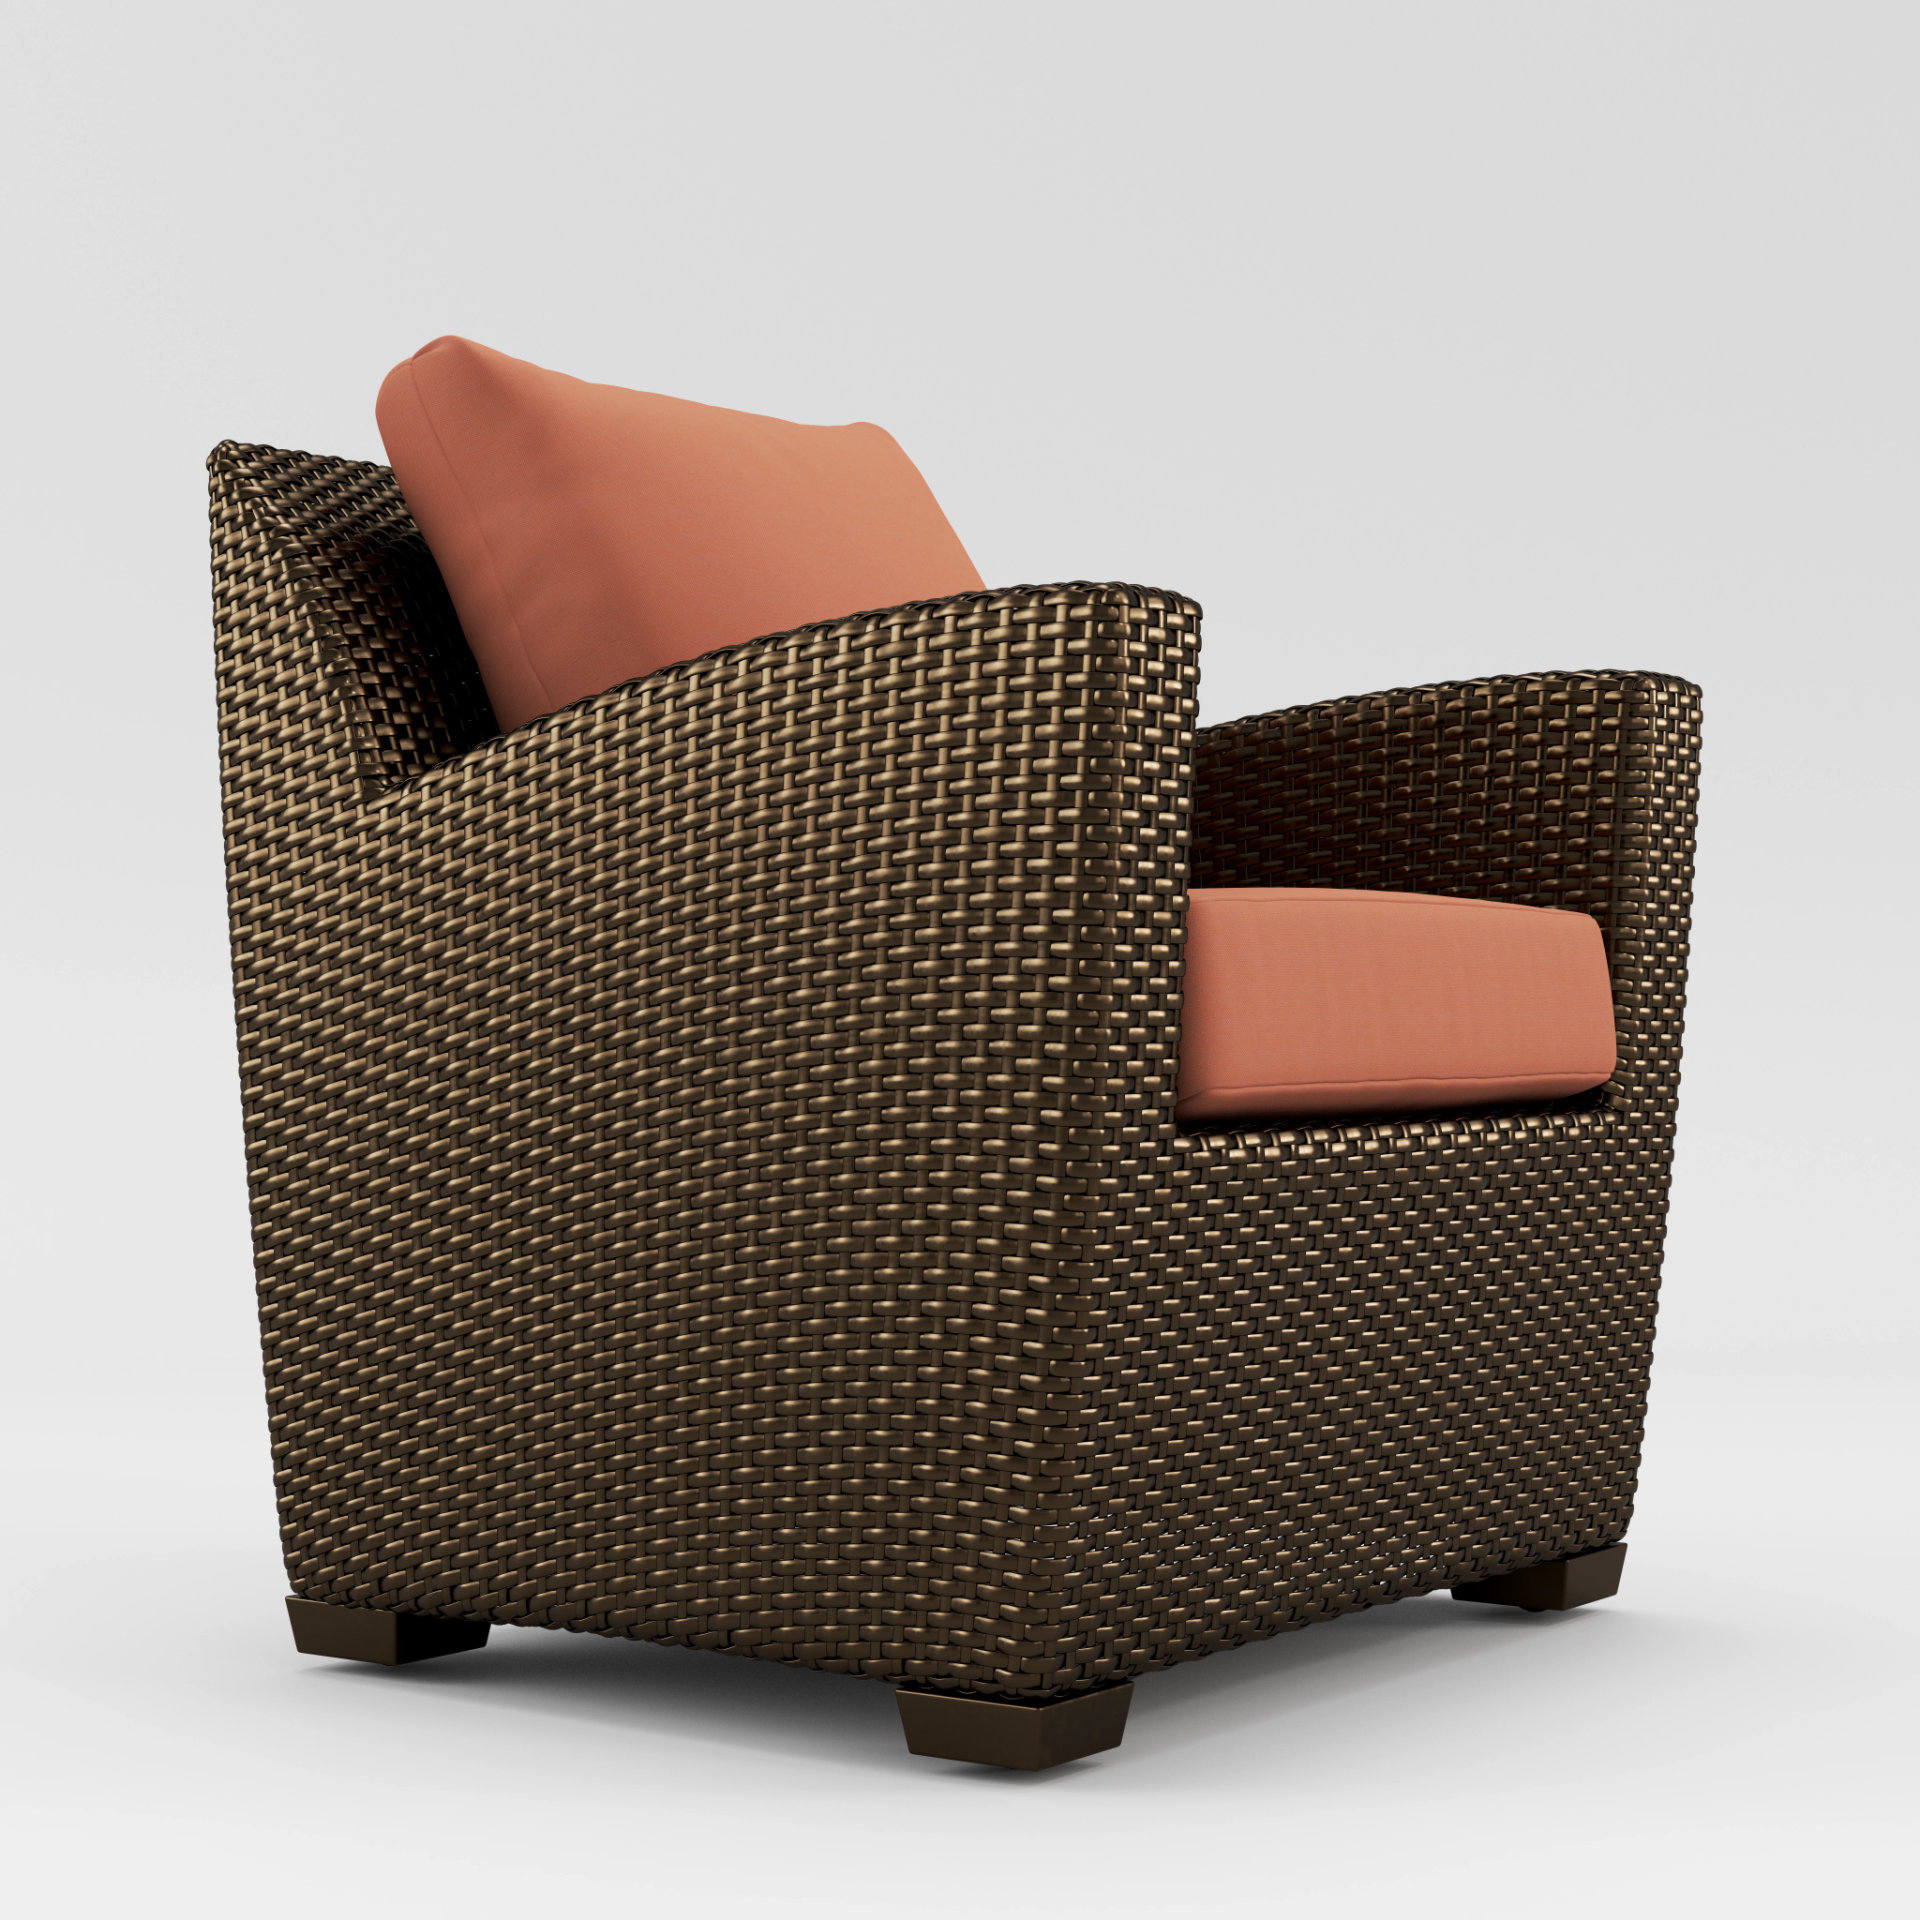 Fusion Lounge Chair - Pillow Back by Brown Jordan